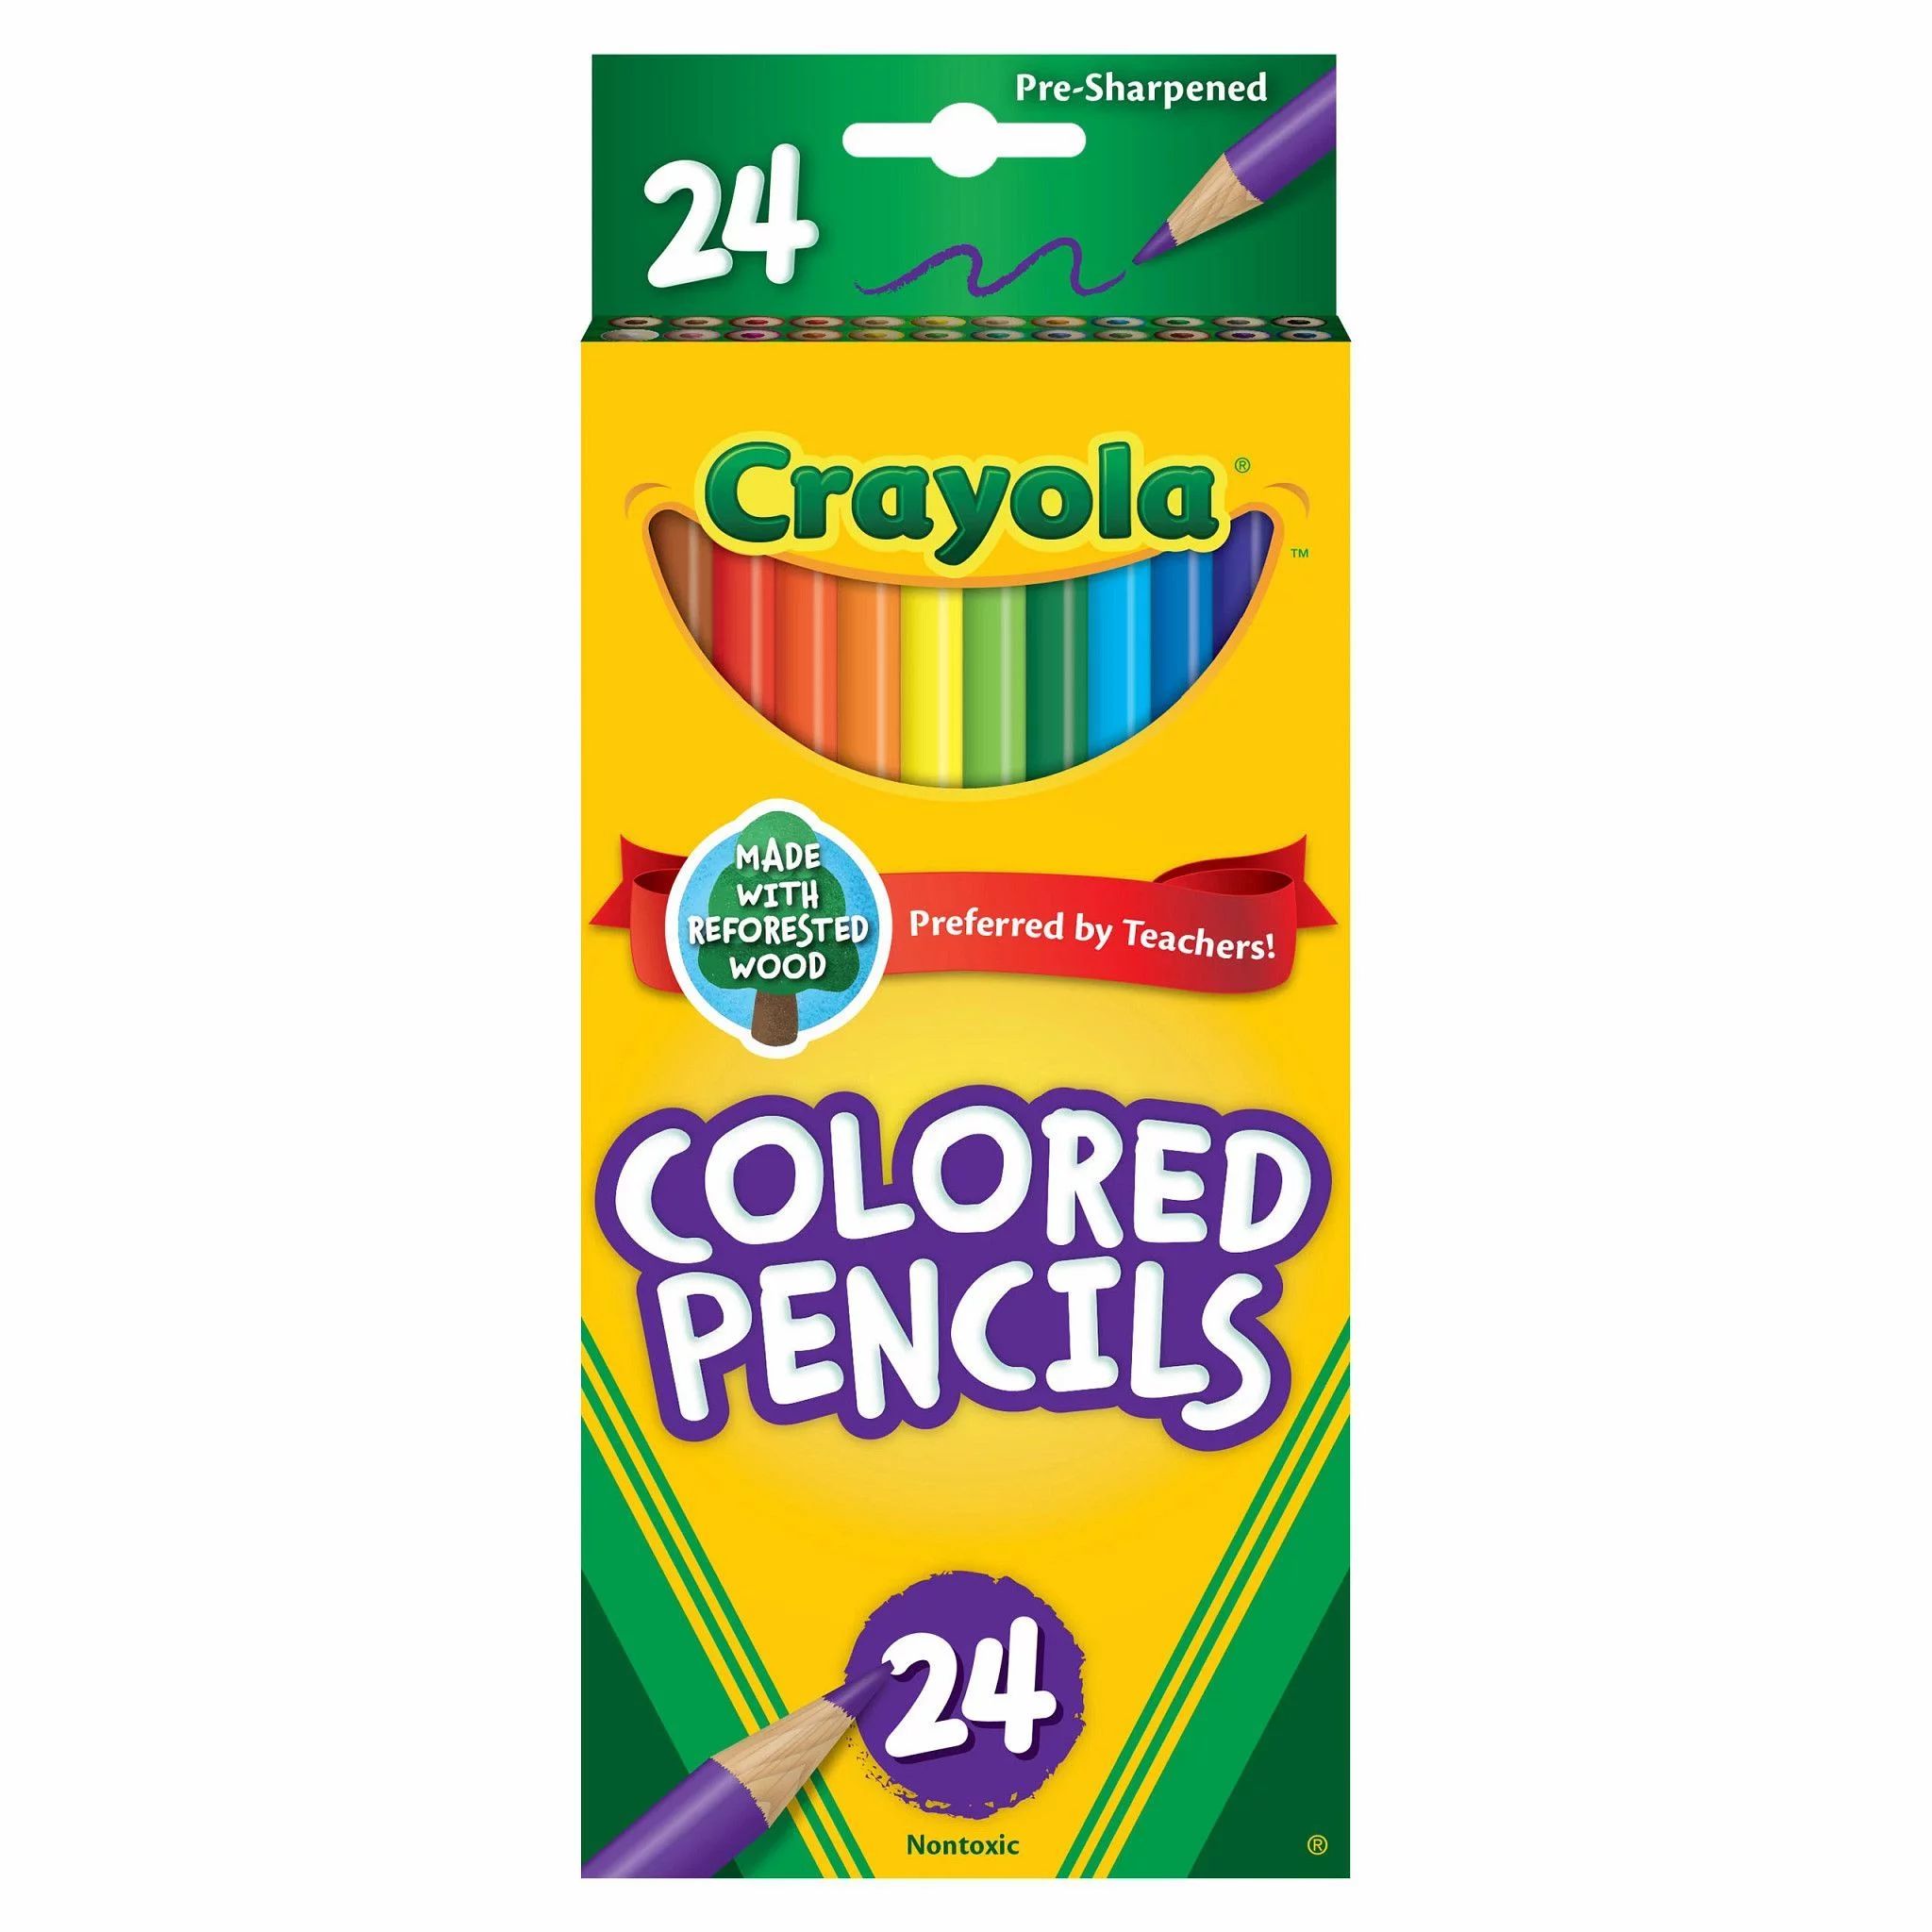 Crayola Colored Pencils, School Supplies, Assorted Colors, Pre-sharpened, 24 Count | Walmart (US)